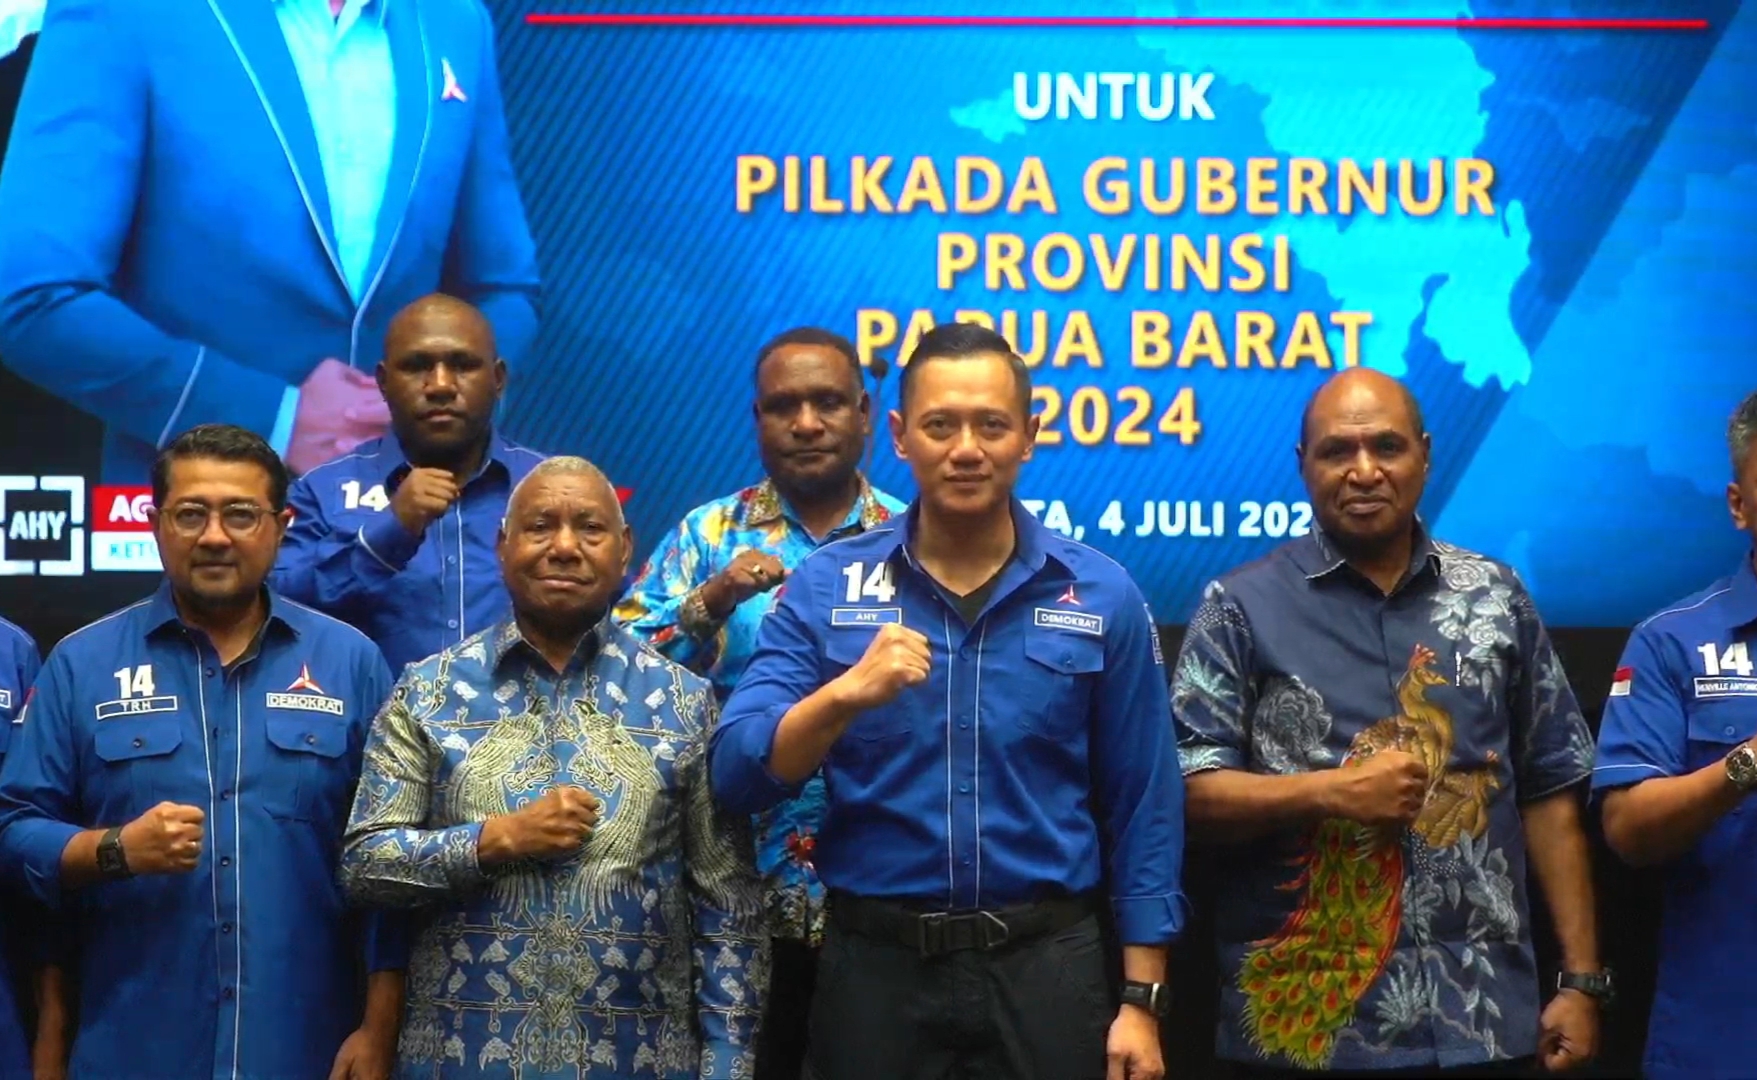 Demokrat Tepis Rumor Jokowi Usulkan Kaesang Pangarep Sebagai Kandidat Pilkada Jakarta